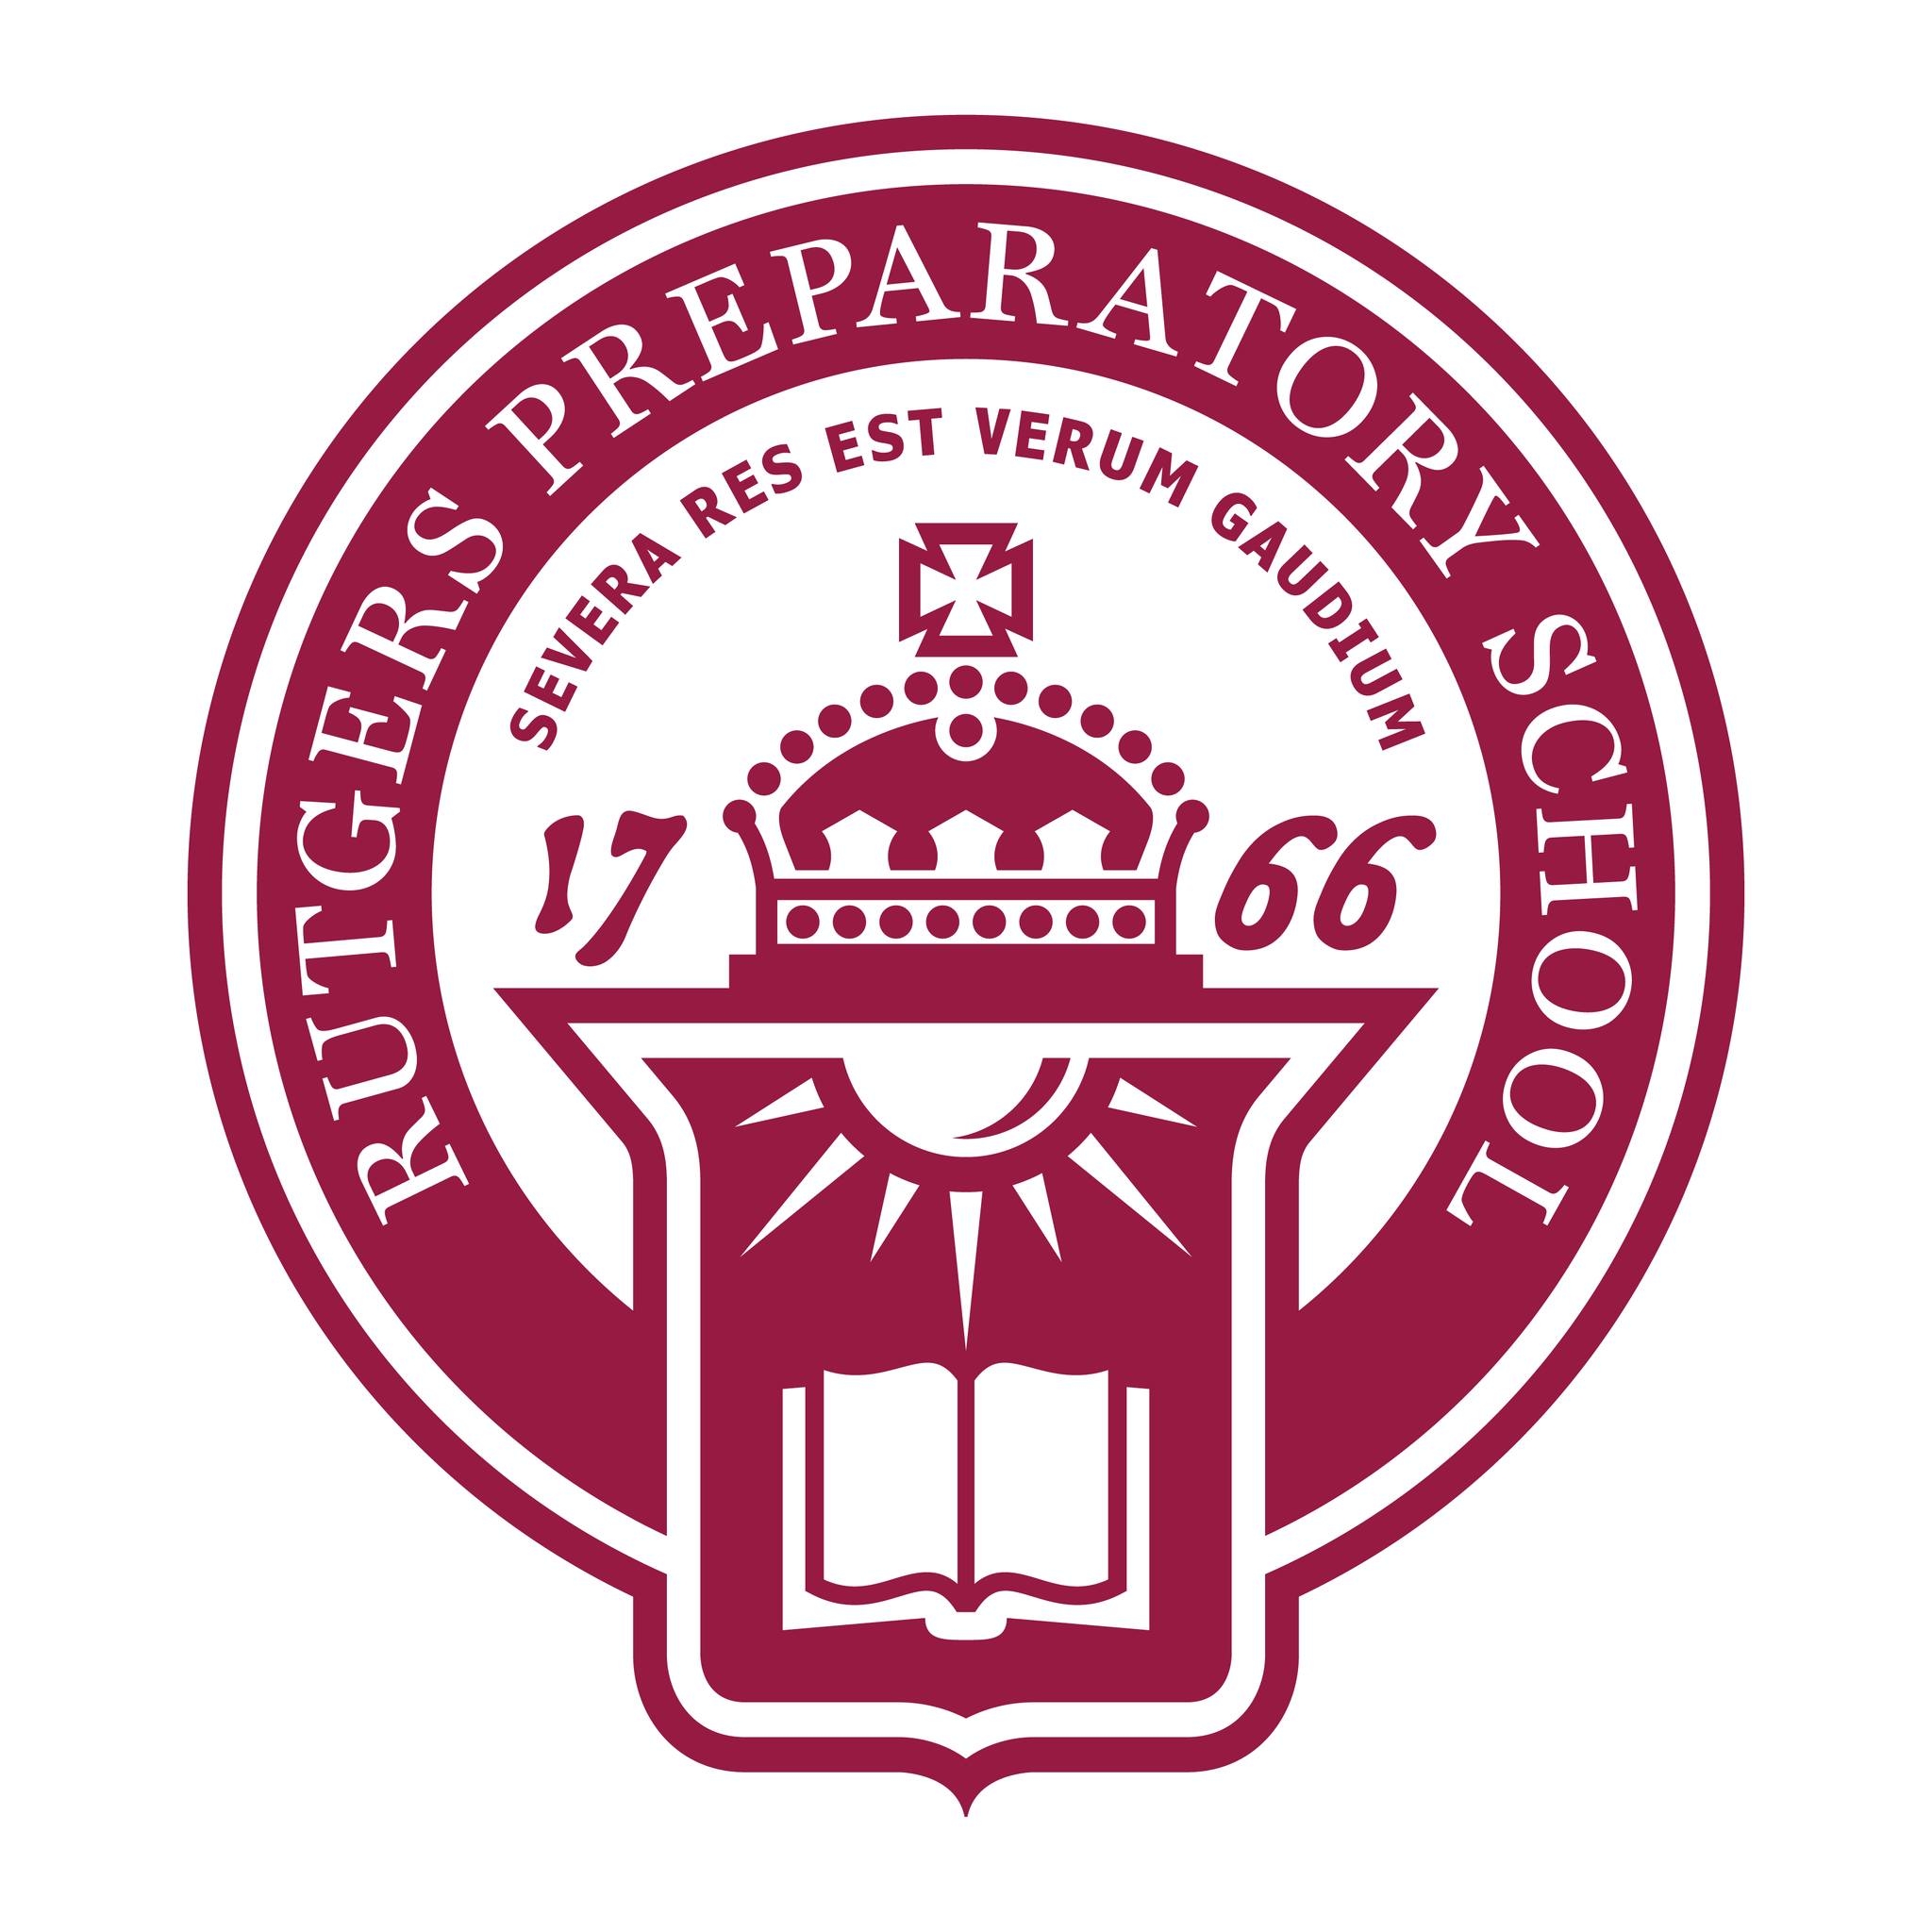 Rutgers Preparatory School